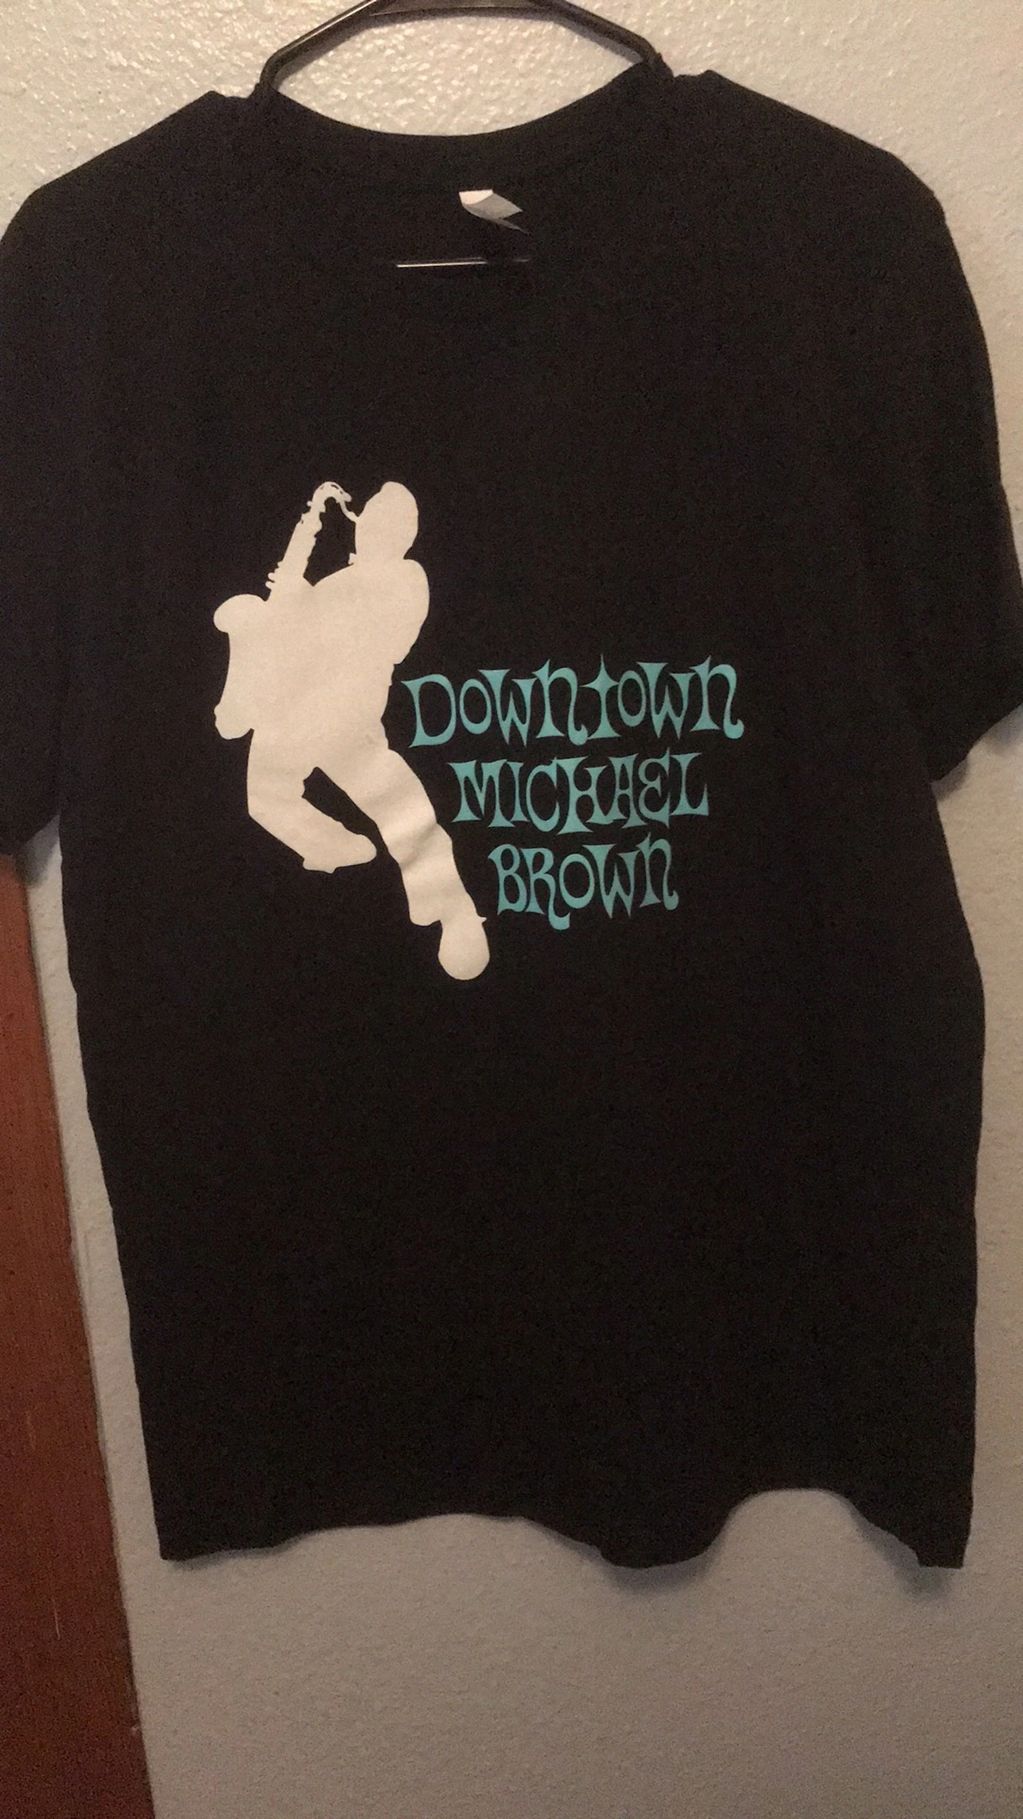 Downtown Michael Brown T-shirt